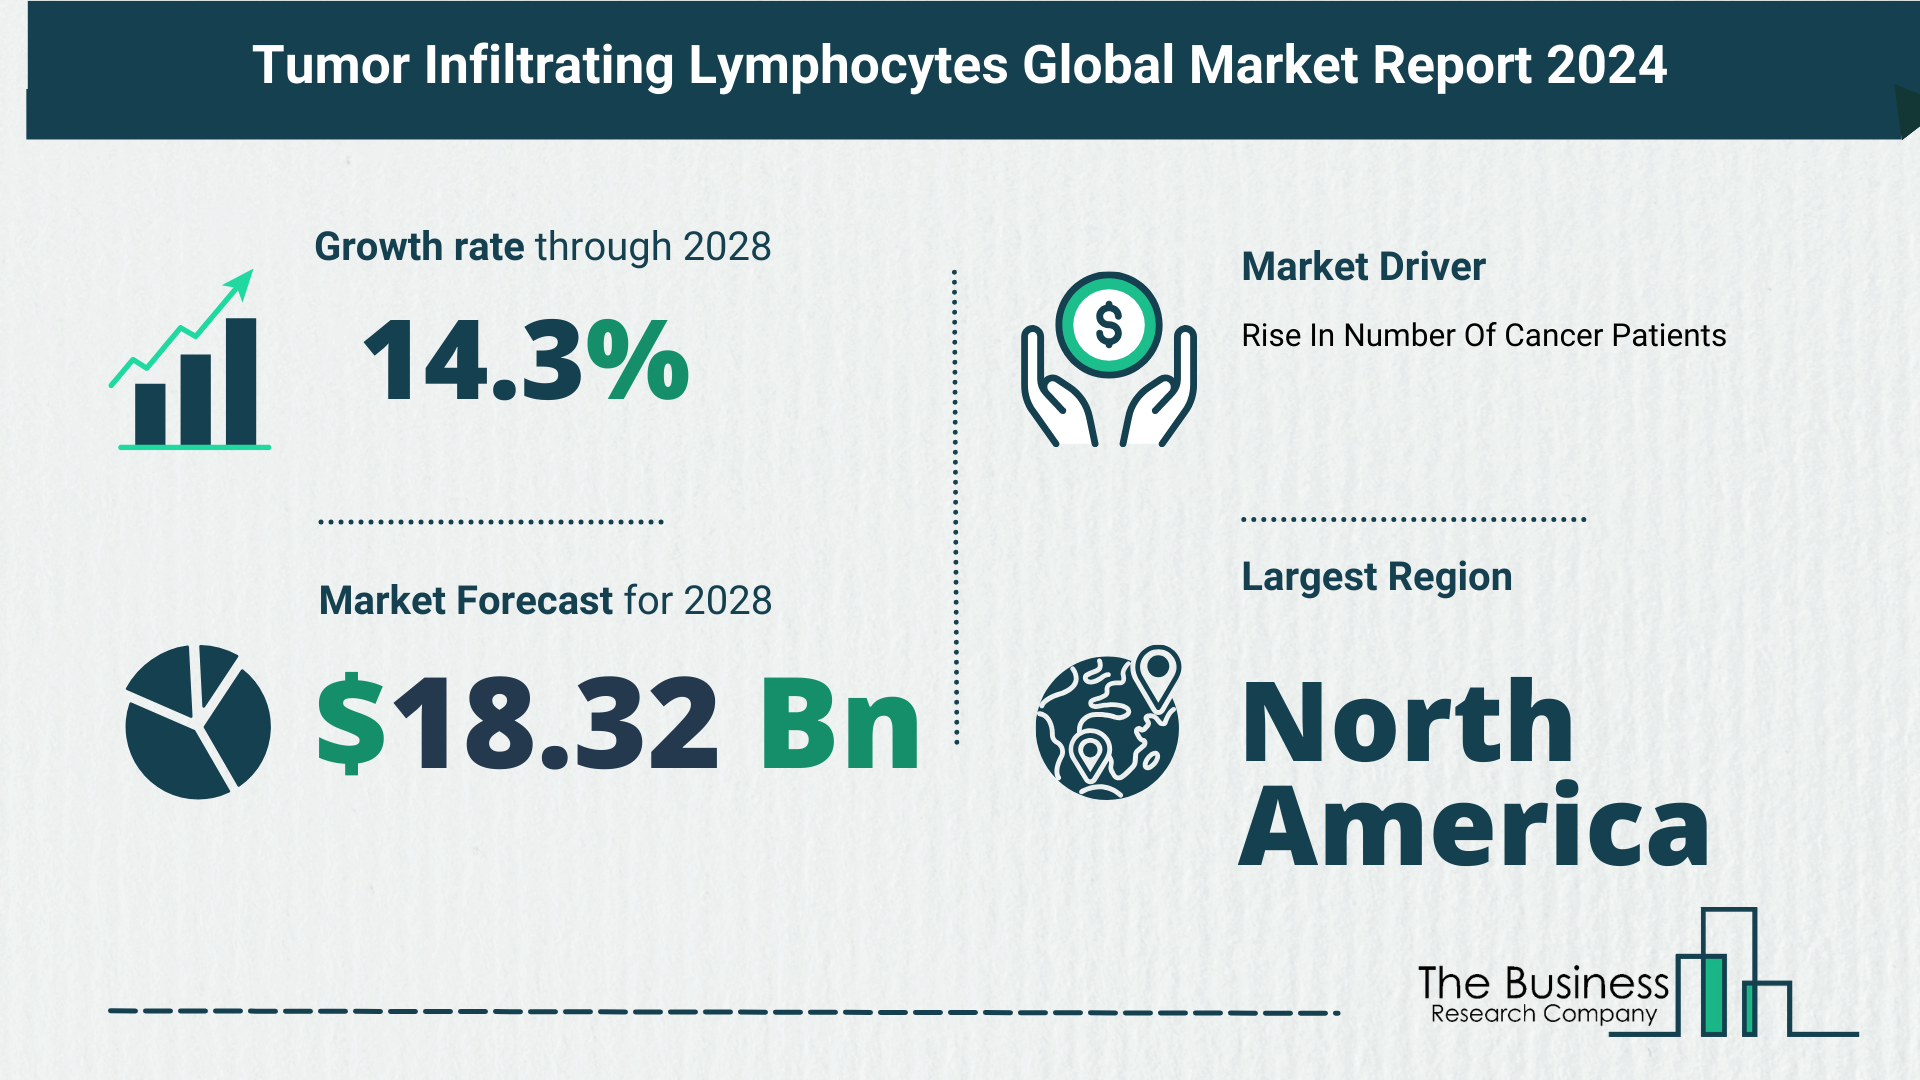 Global Tumor Infiltrating Lymphocytes Market